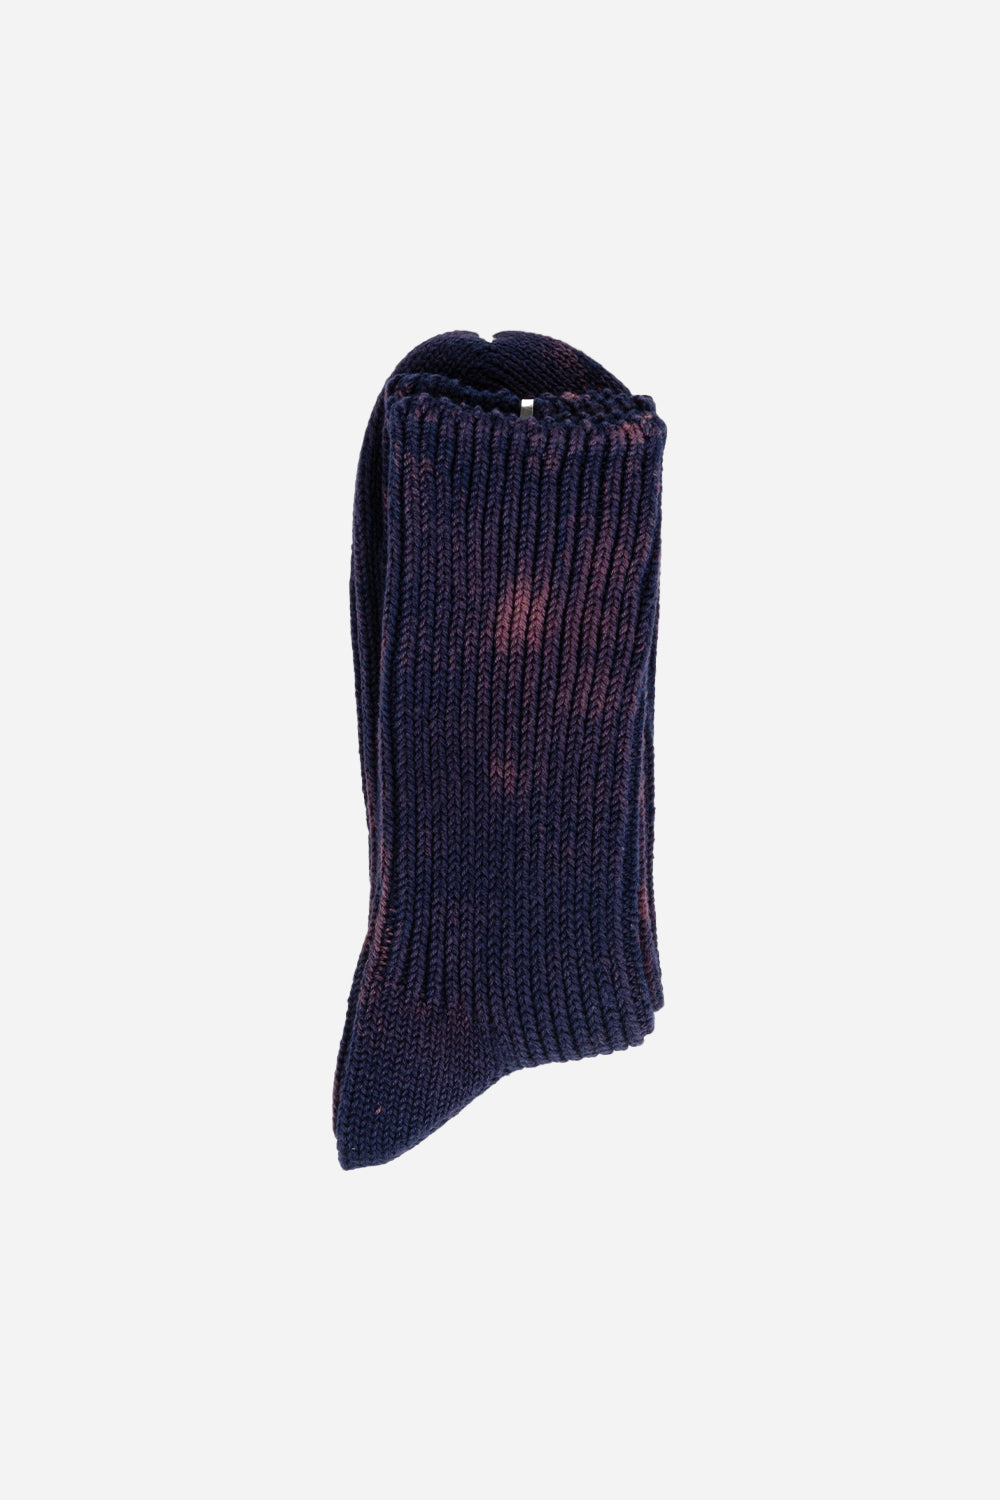 Rostersox-BA-navy-socks